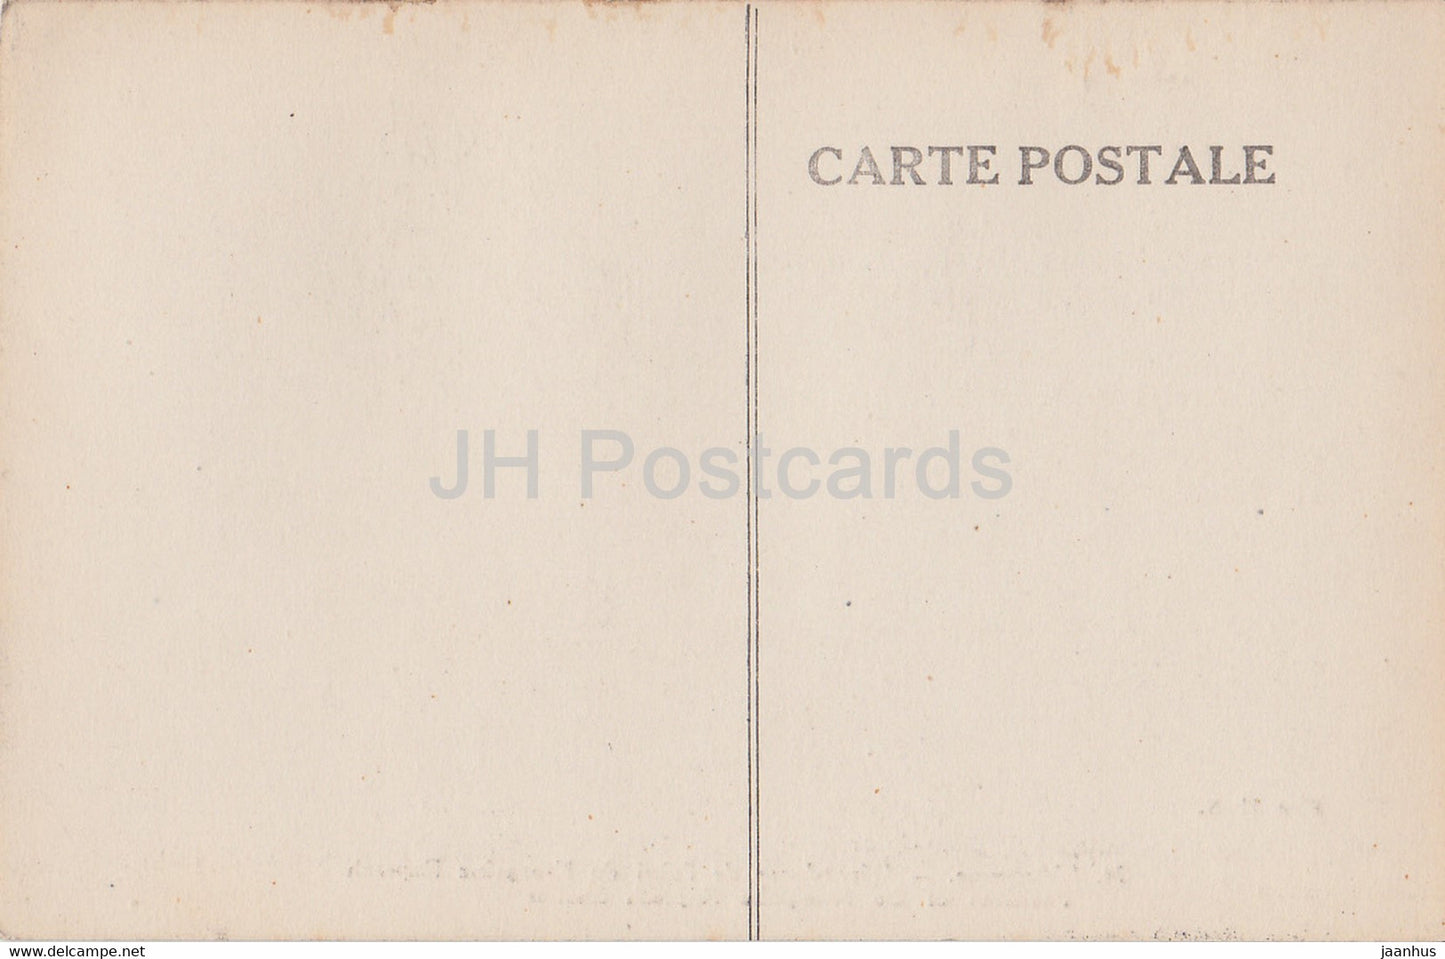 L'Argonne - Dependance de l'abri du Kronprinz Ruprech - 74 - Militär - Erster Weltkrieg - alte Postkarte - Frankreich - unbenutzt